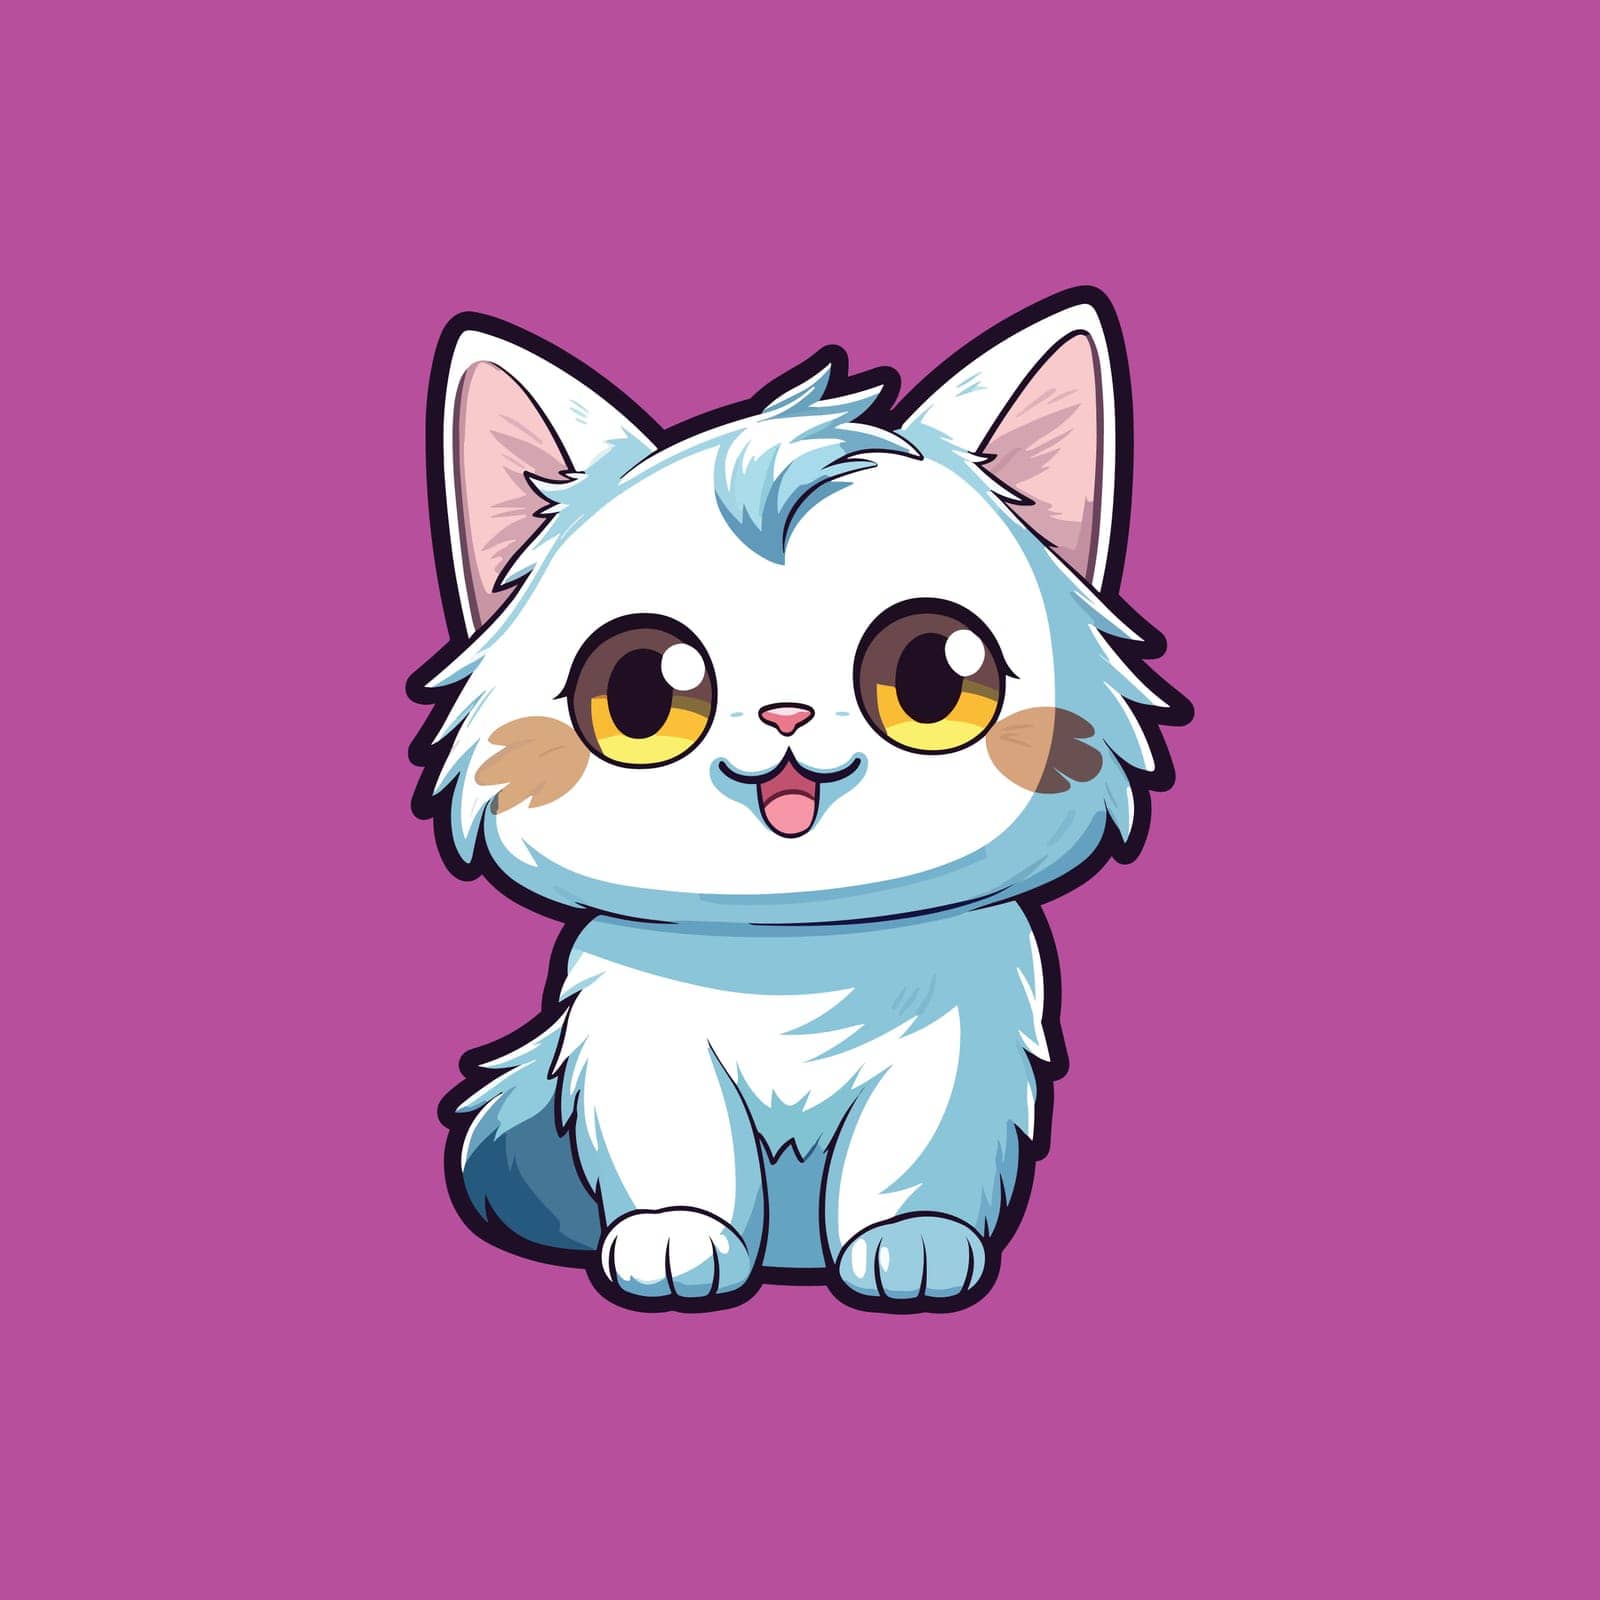 Cute cat smiling cartoon vector illustration